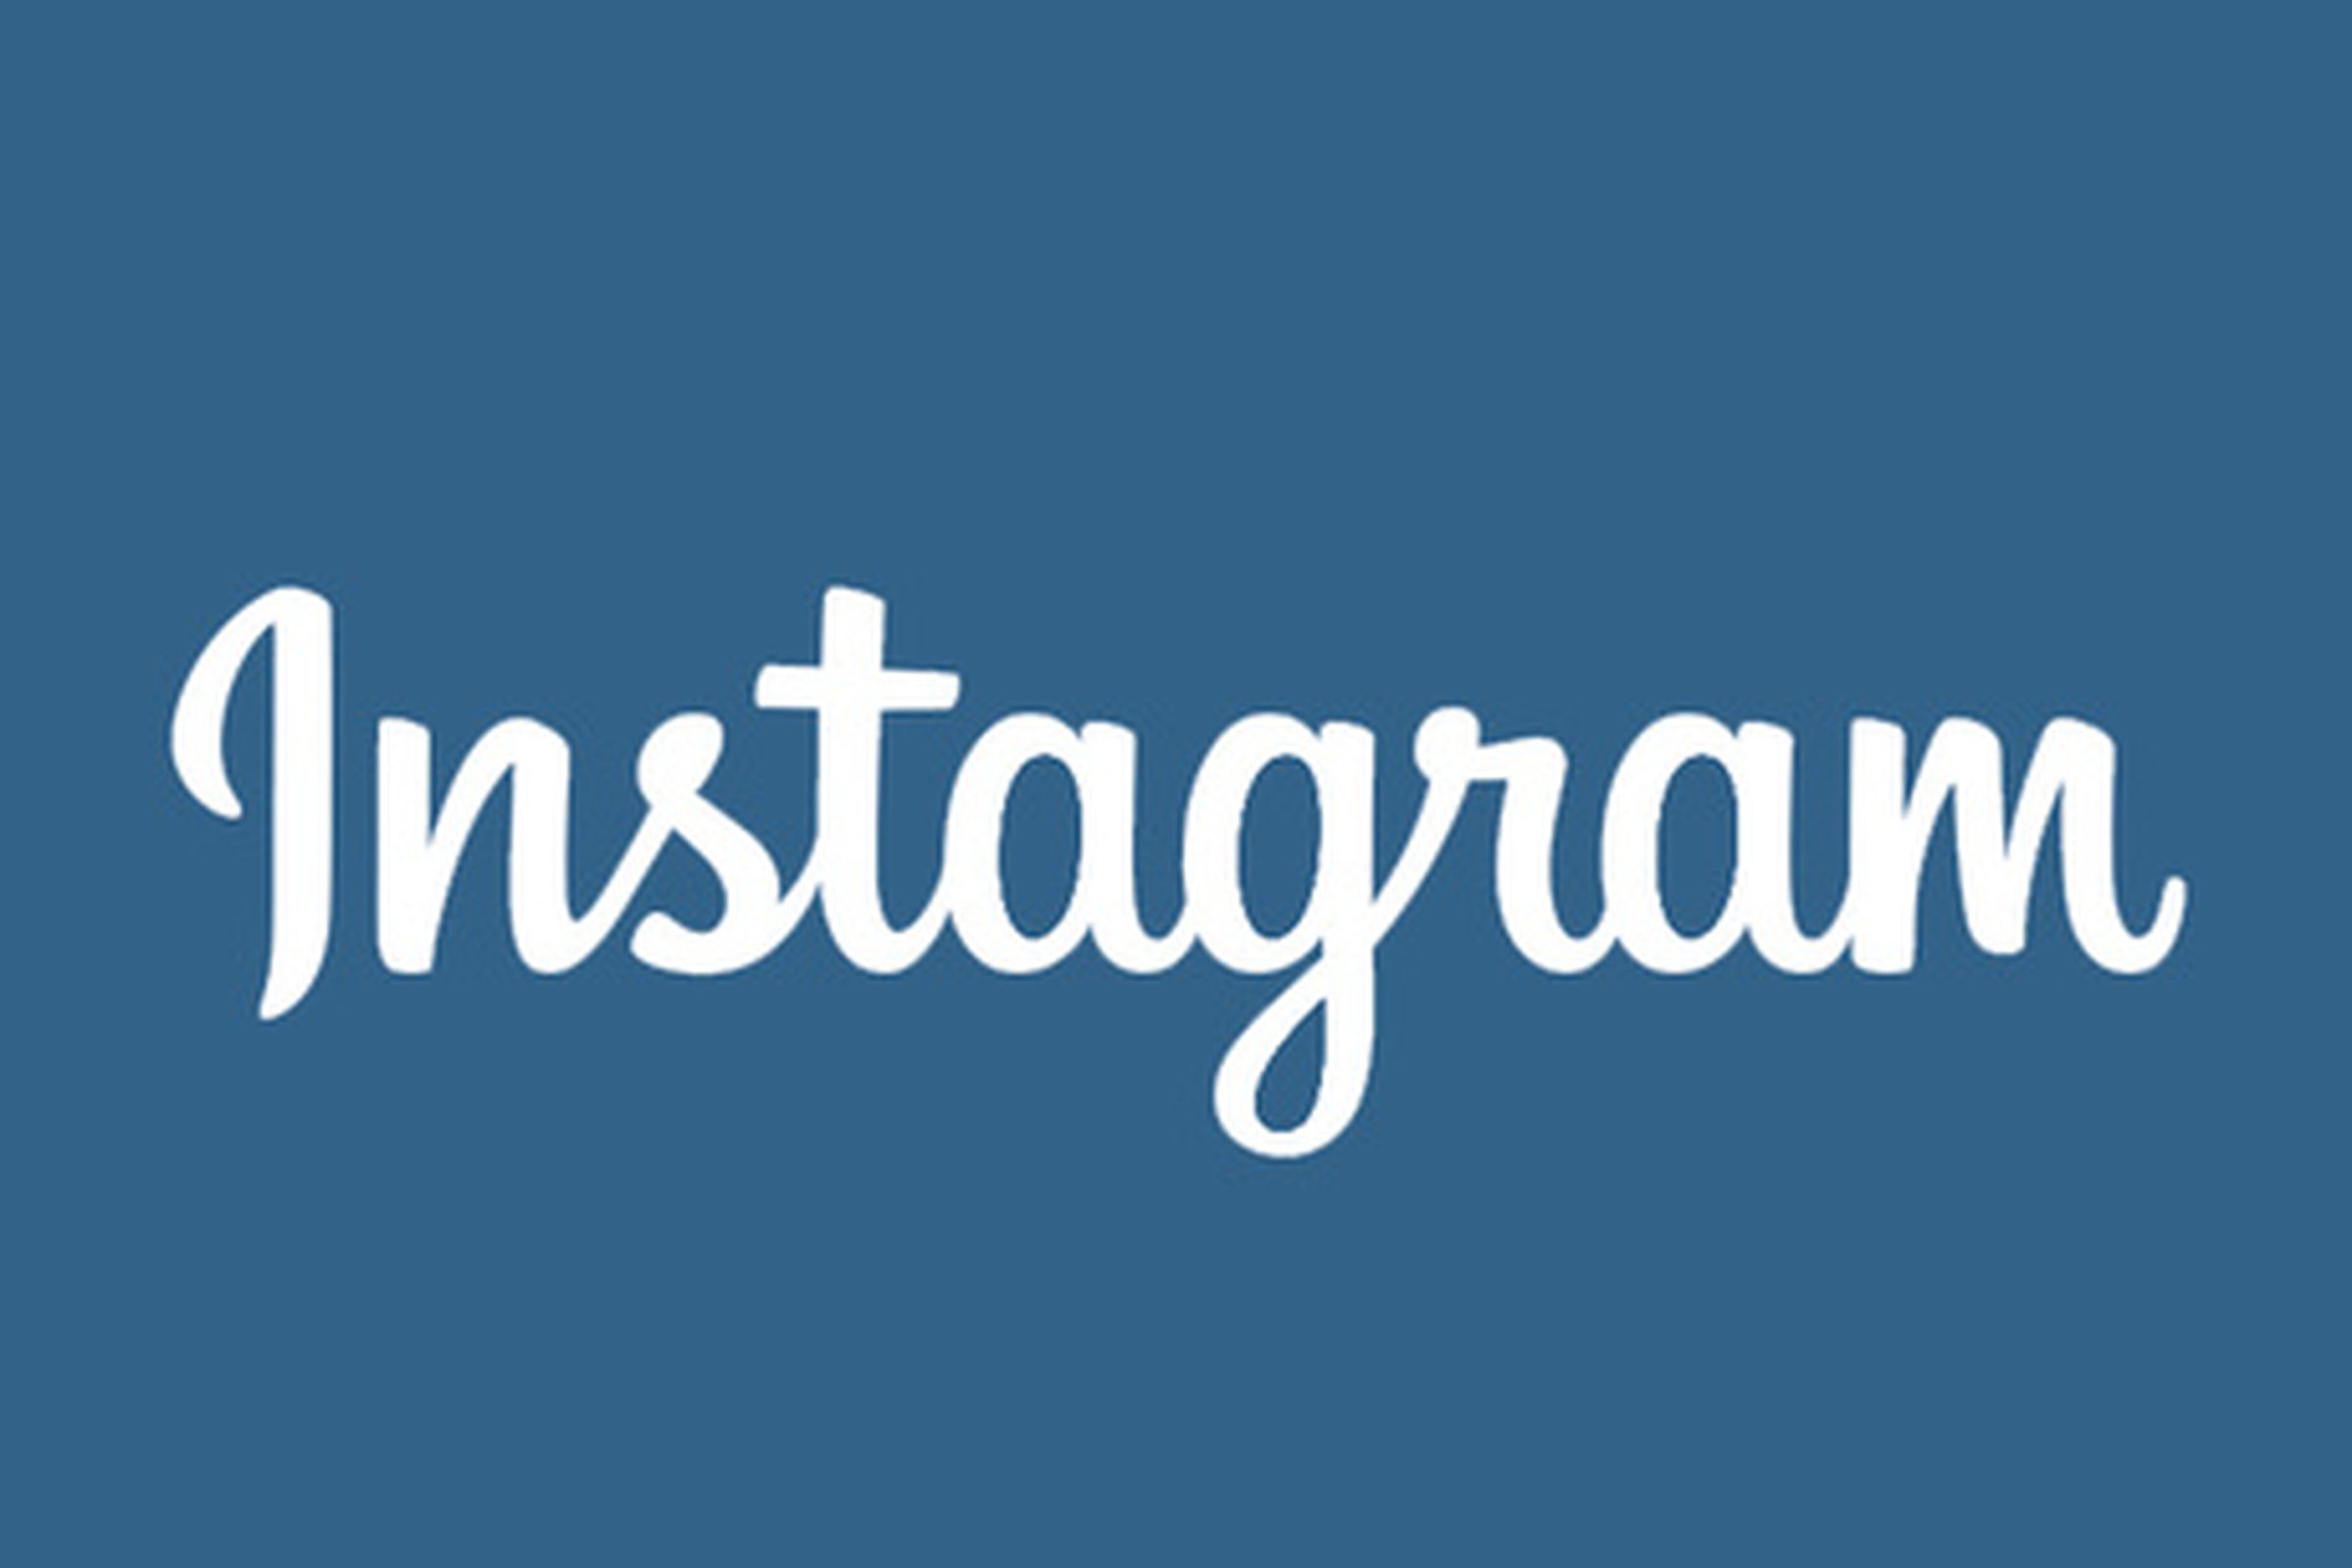 Instagram new logo